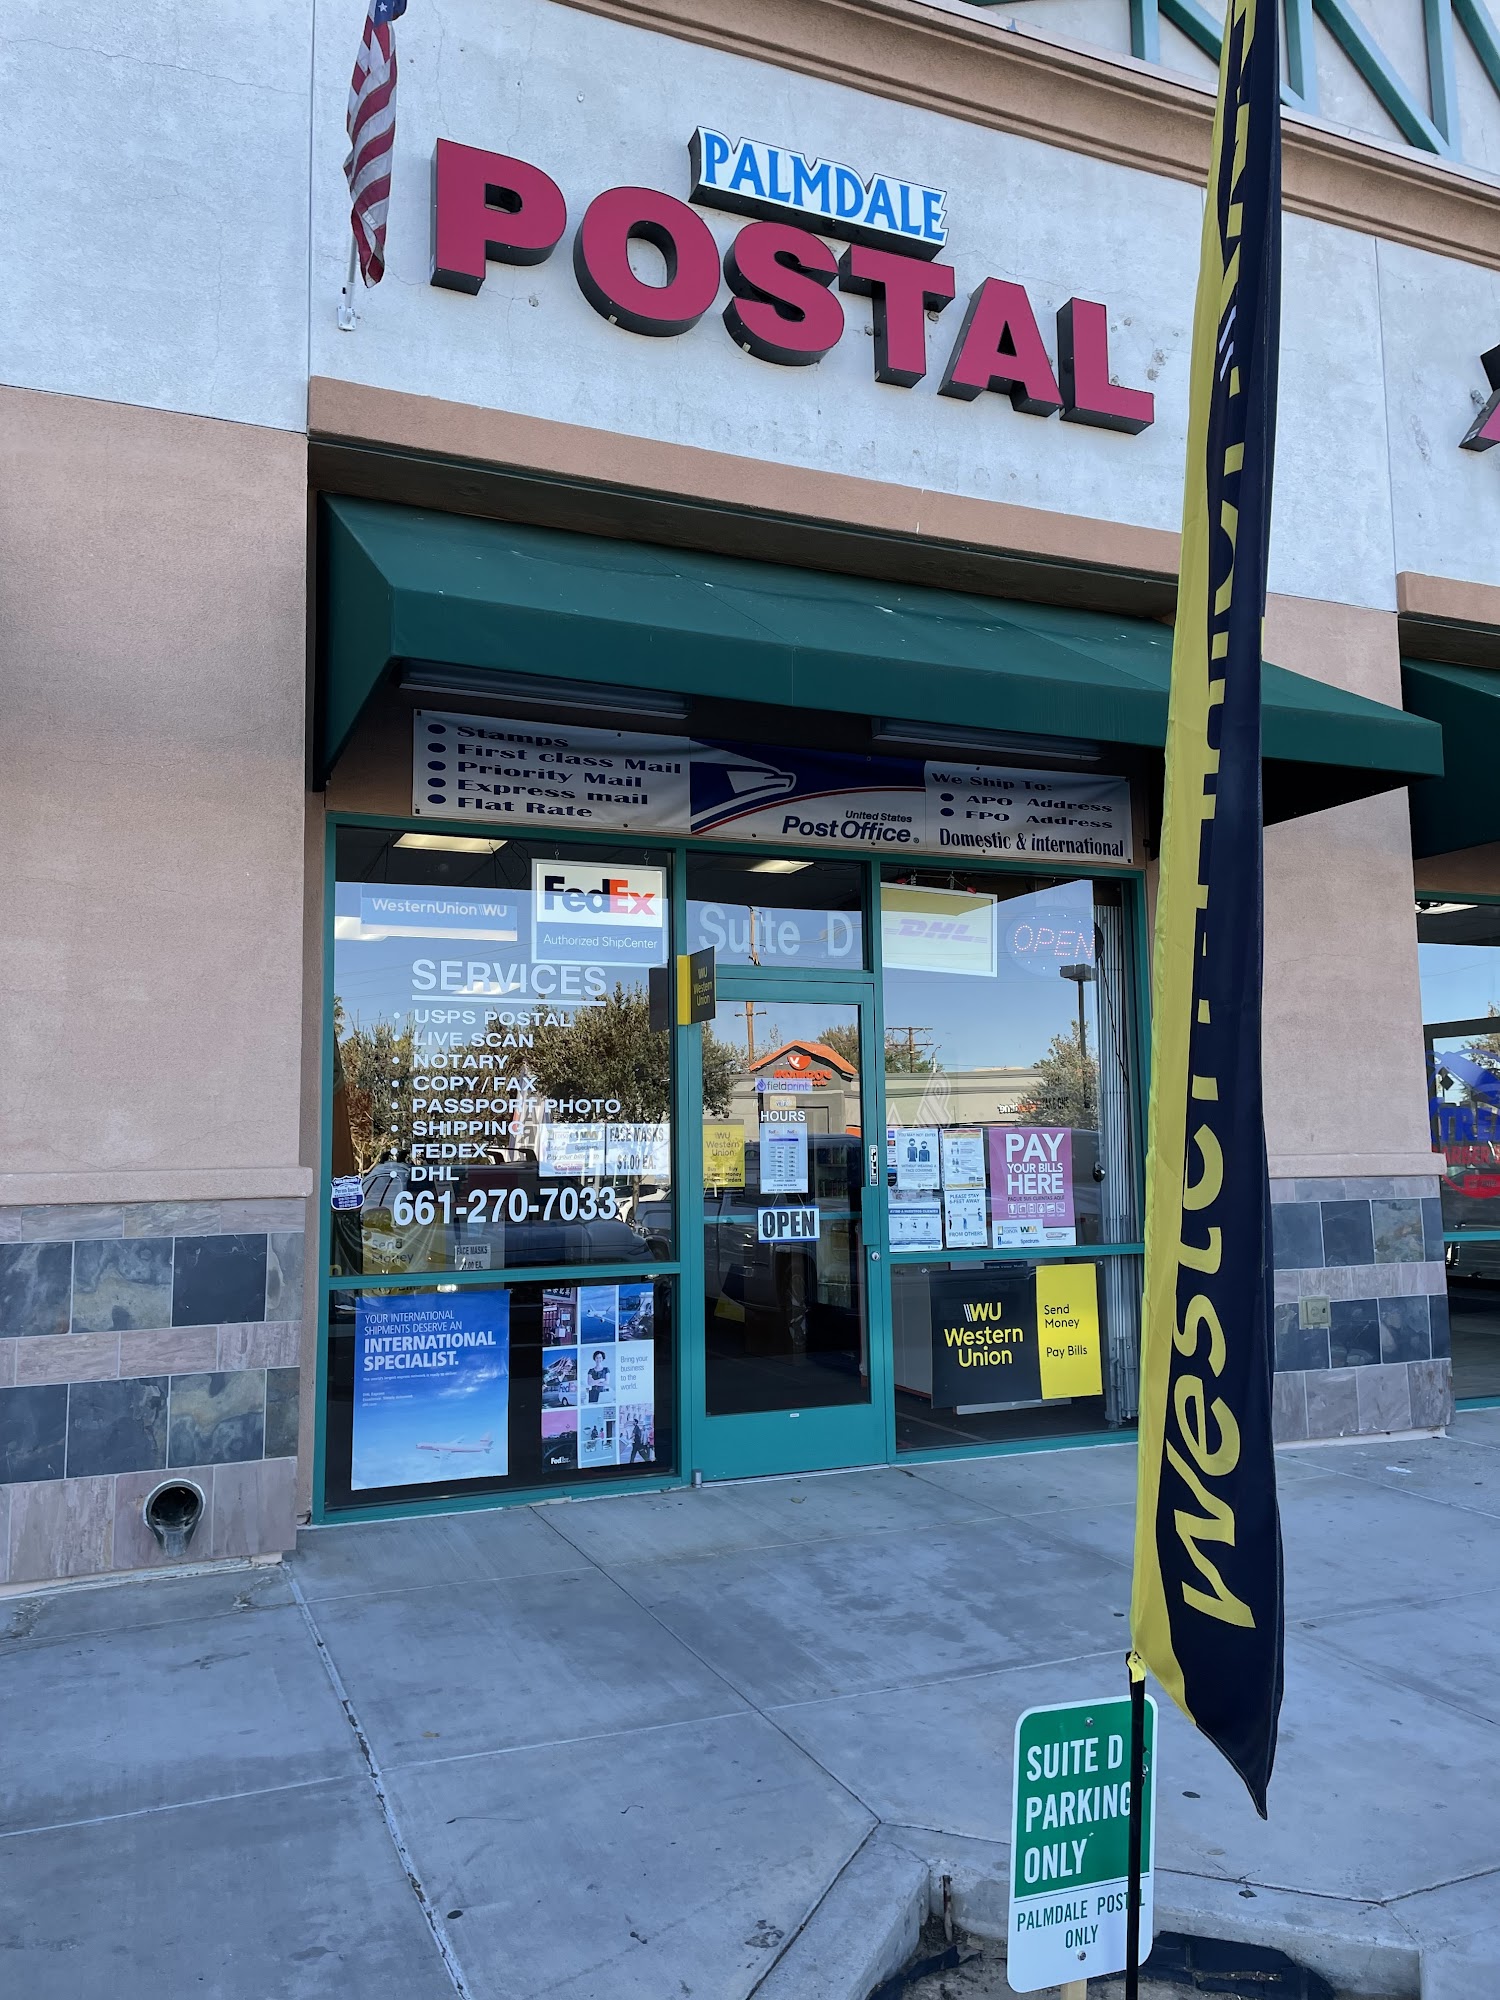 Palmdale Postal